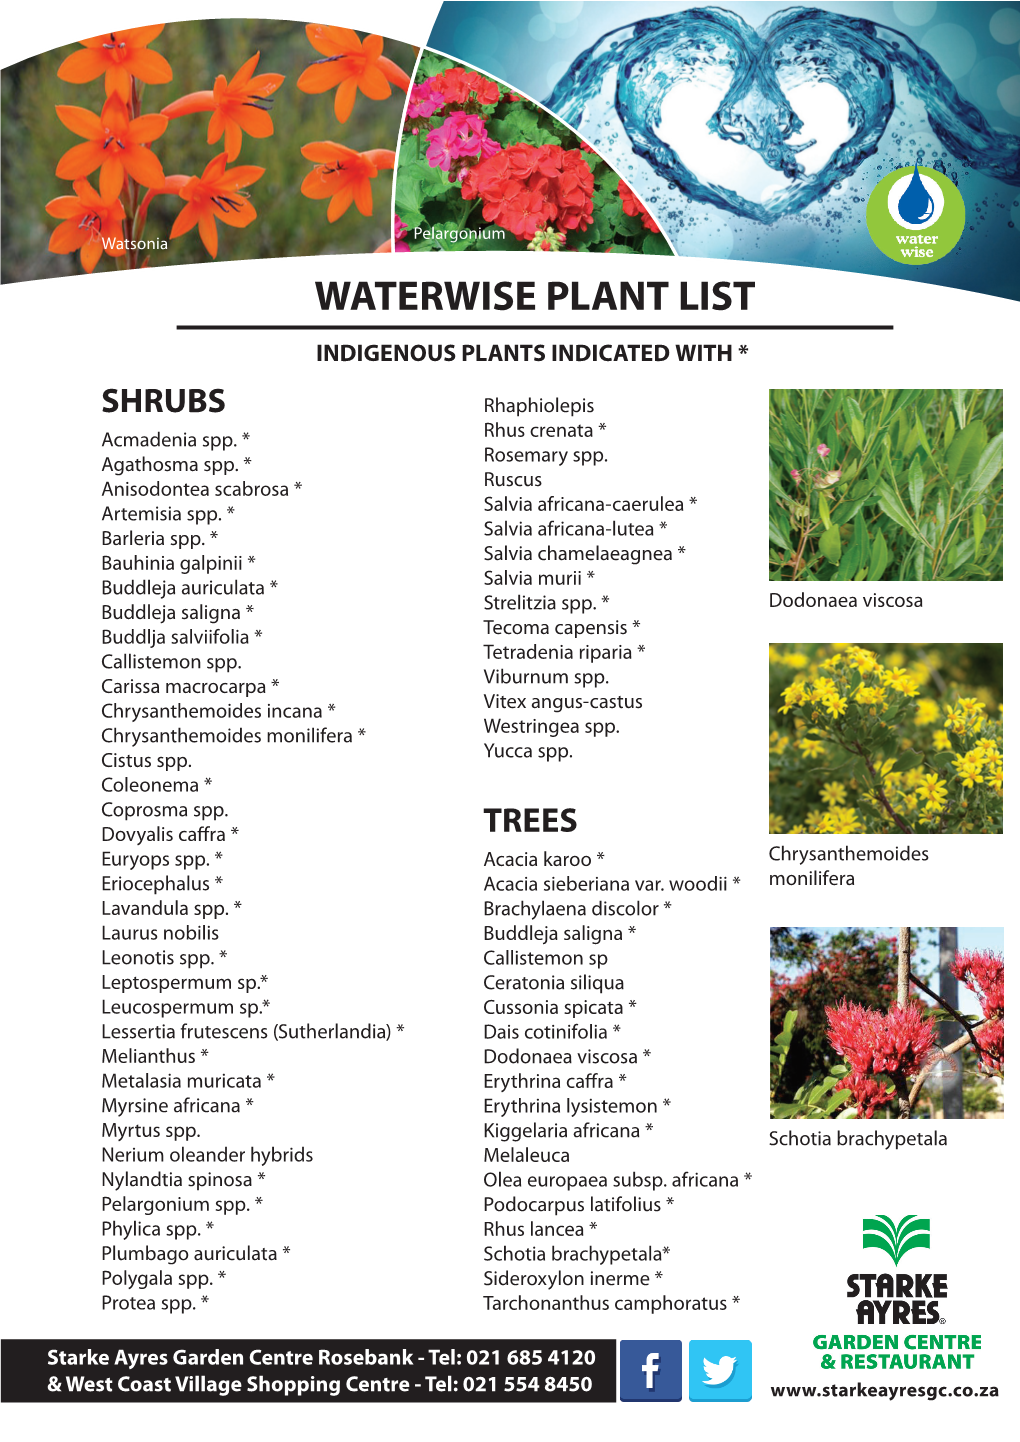 SAGC Water Wise Plant List 2016.Ai